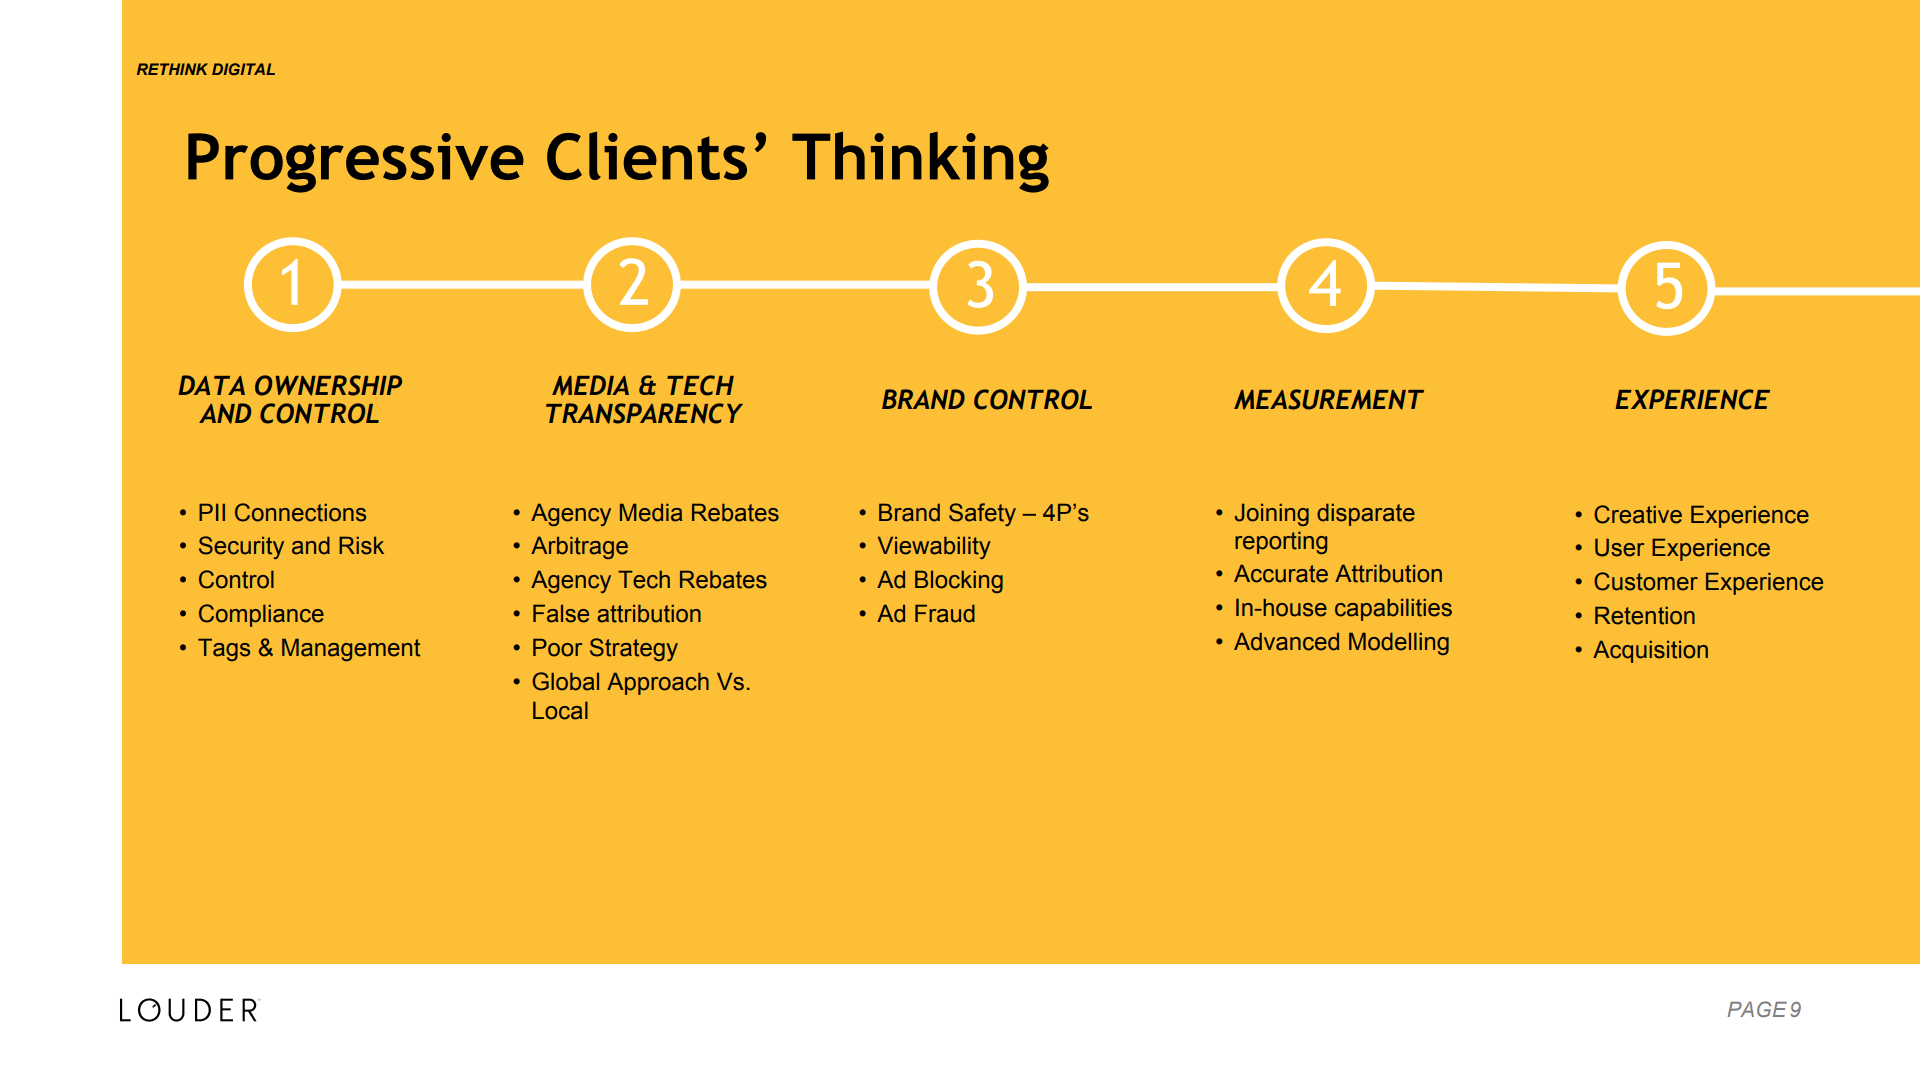 Progressive clients' thinking